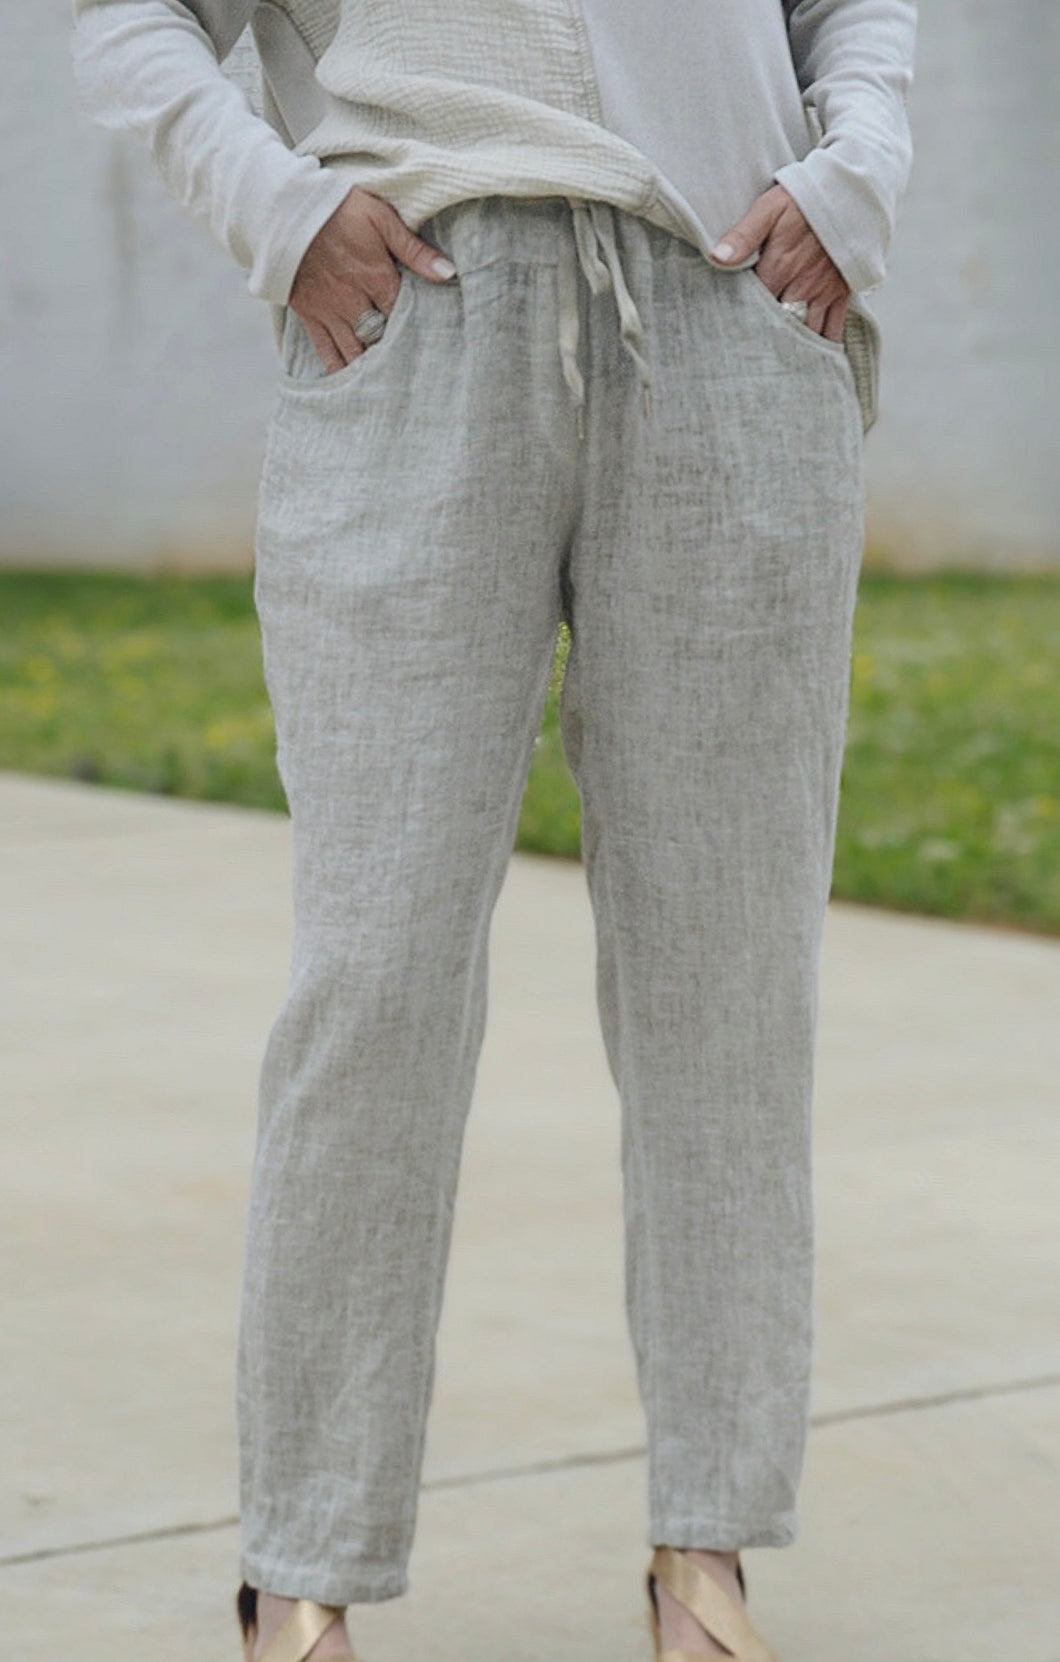 Marisima Linen Pants in Silver Pants Urban Mangoz   